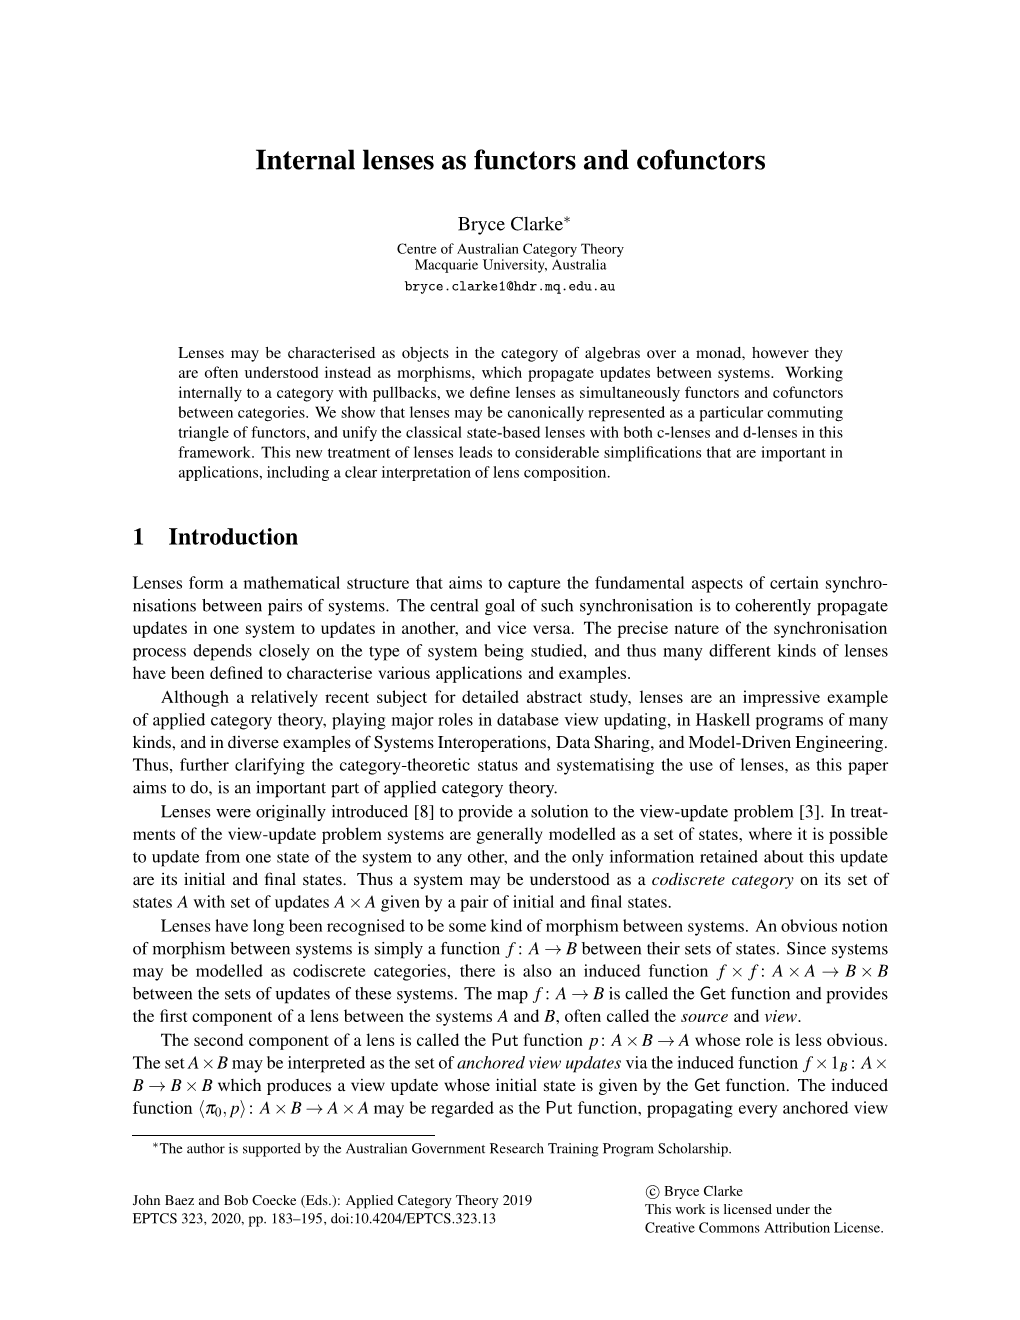 Internal Lenses As Functors and Cofunctors